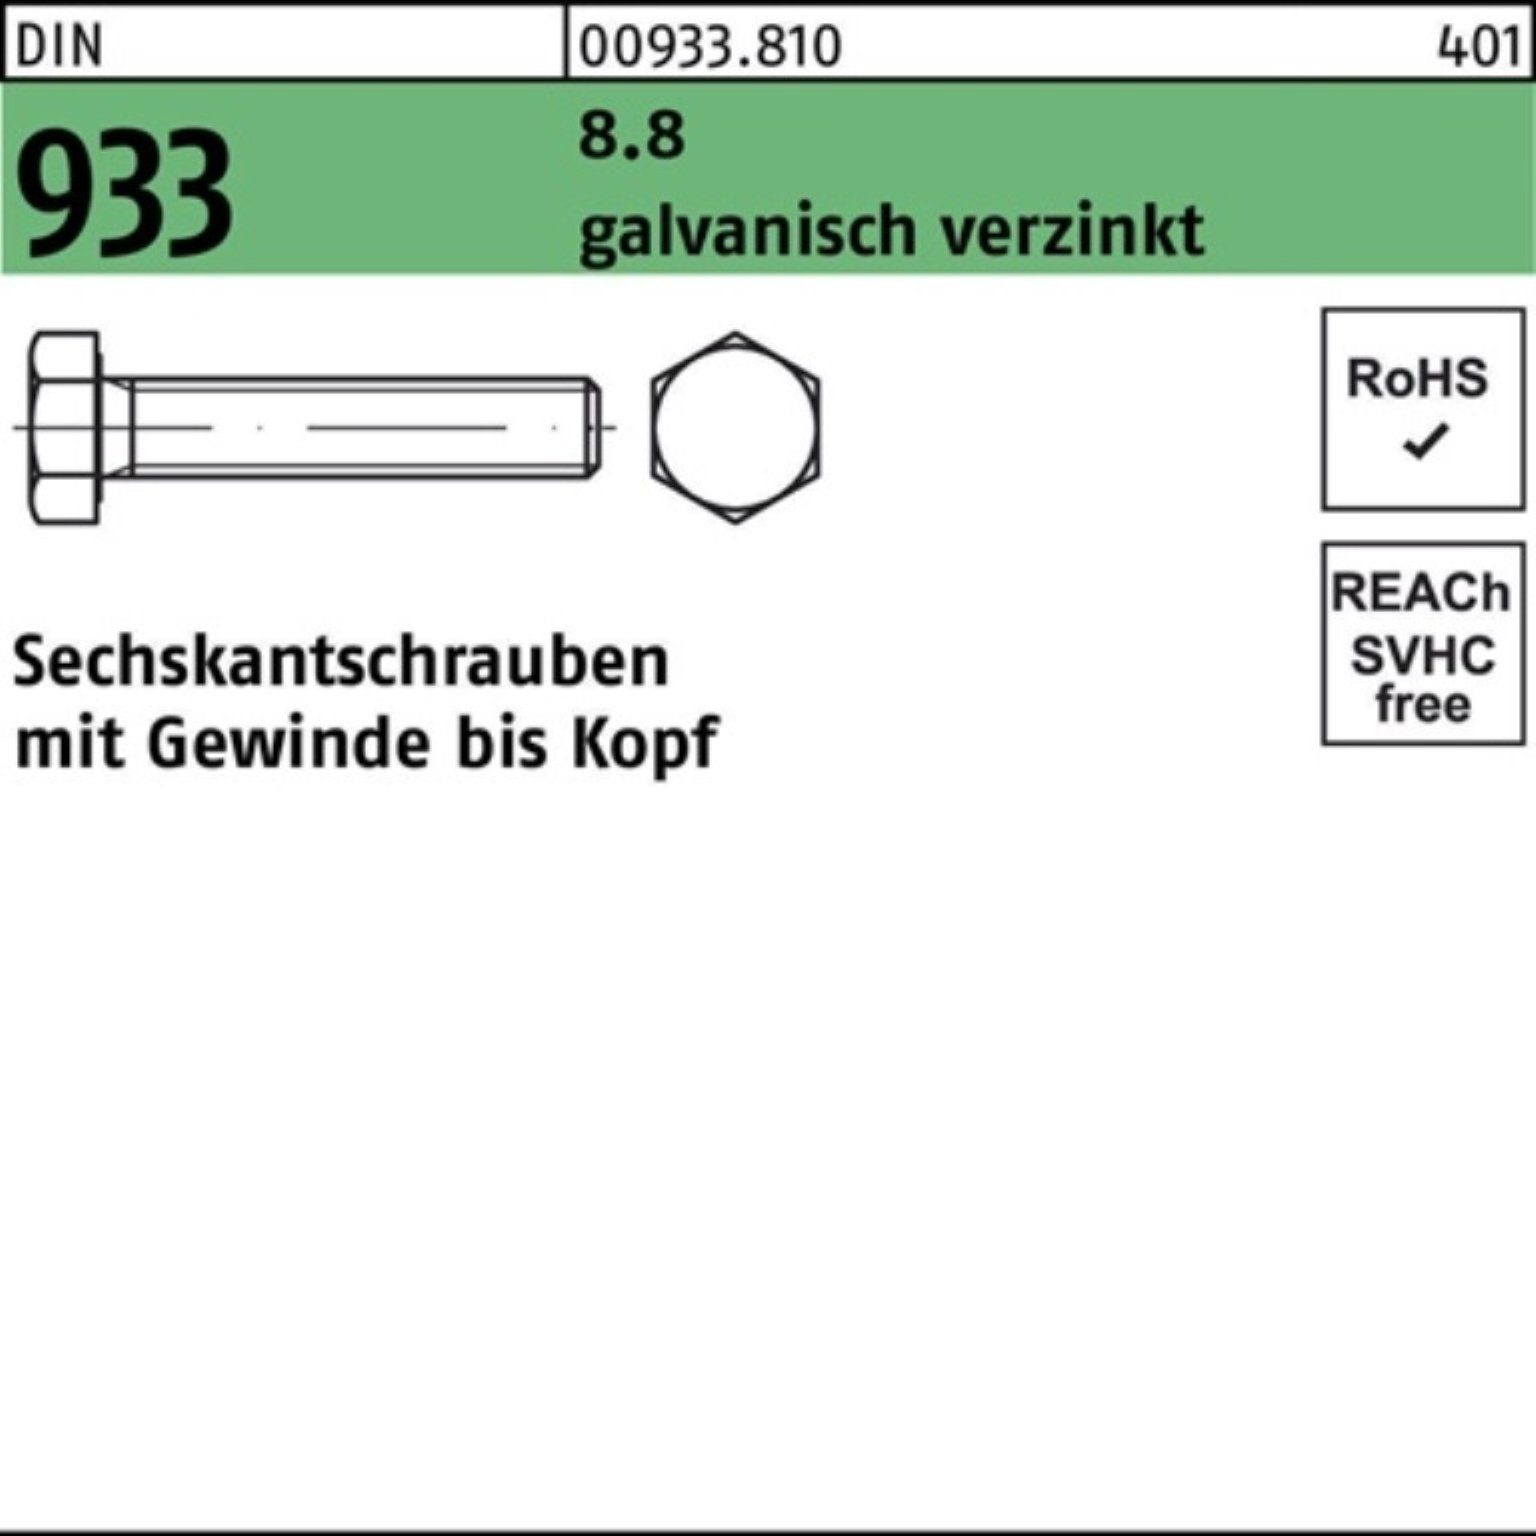 Reyher Sechskantschraube 500er Pack Sechskantschraube DIN 933 VG M3x 5 8.8 galv.verz. 500 Stüc